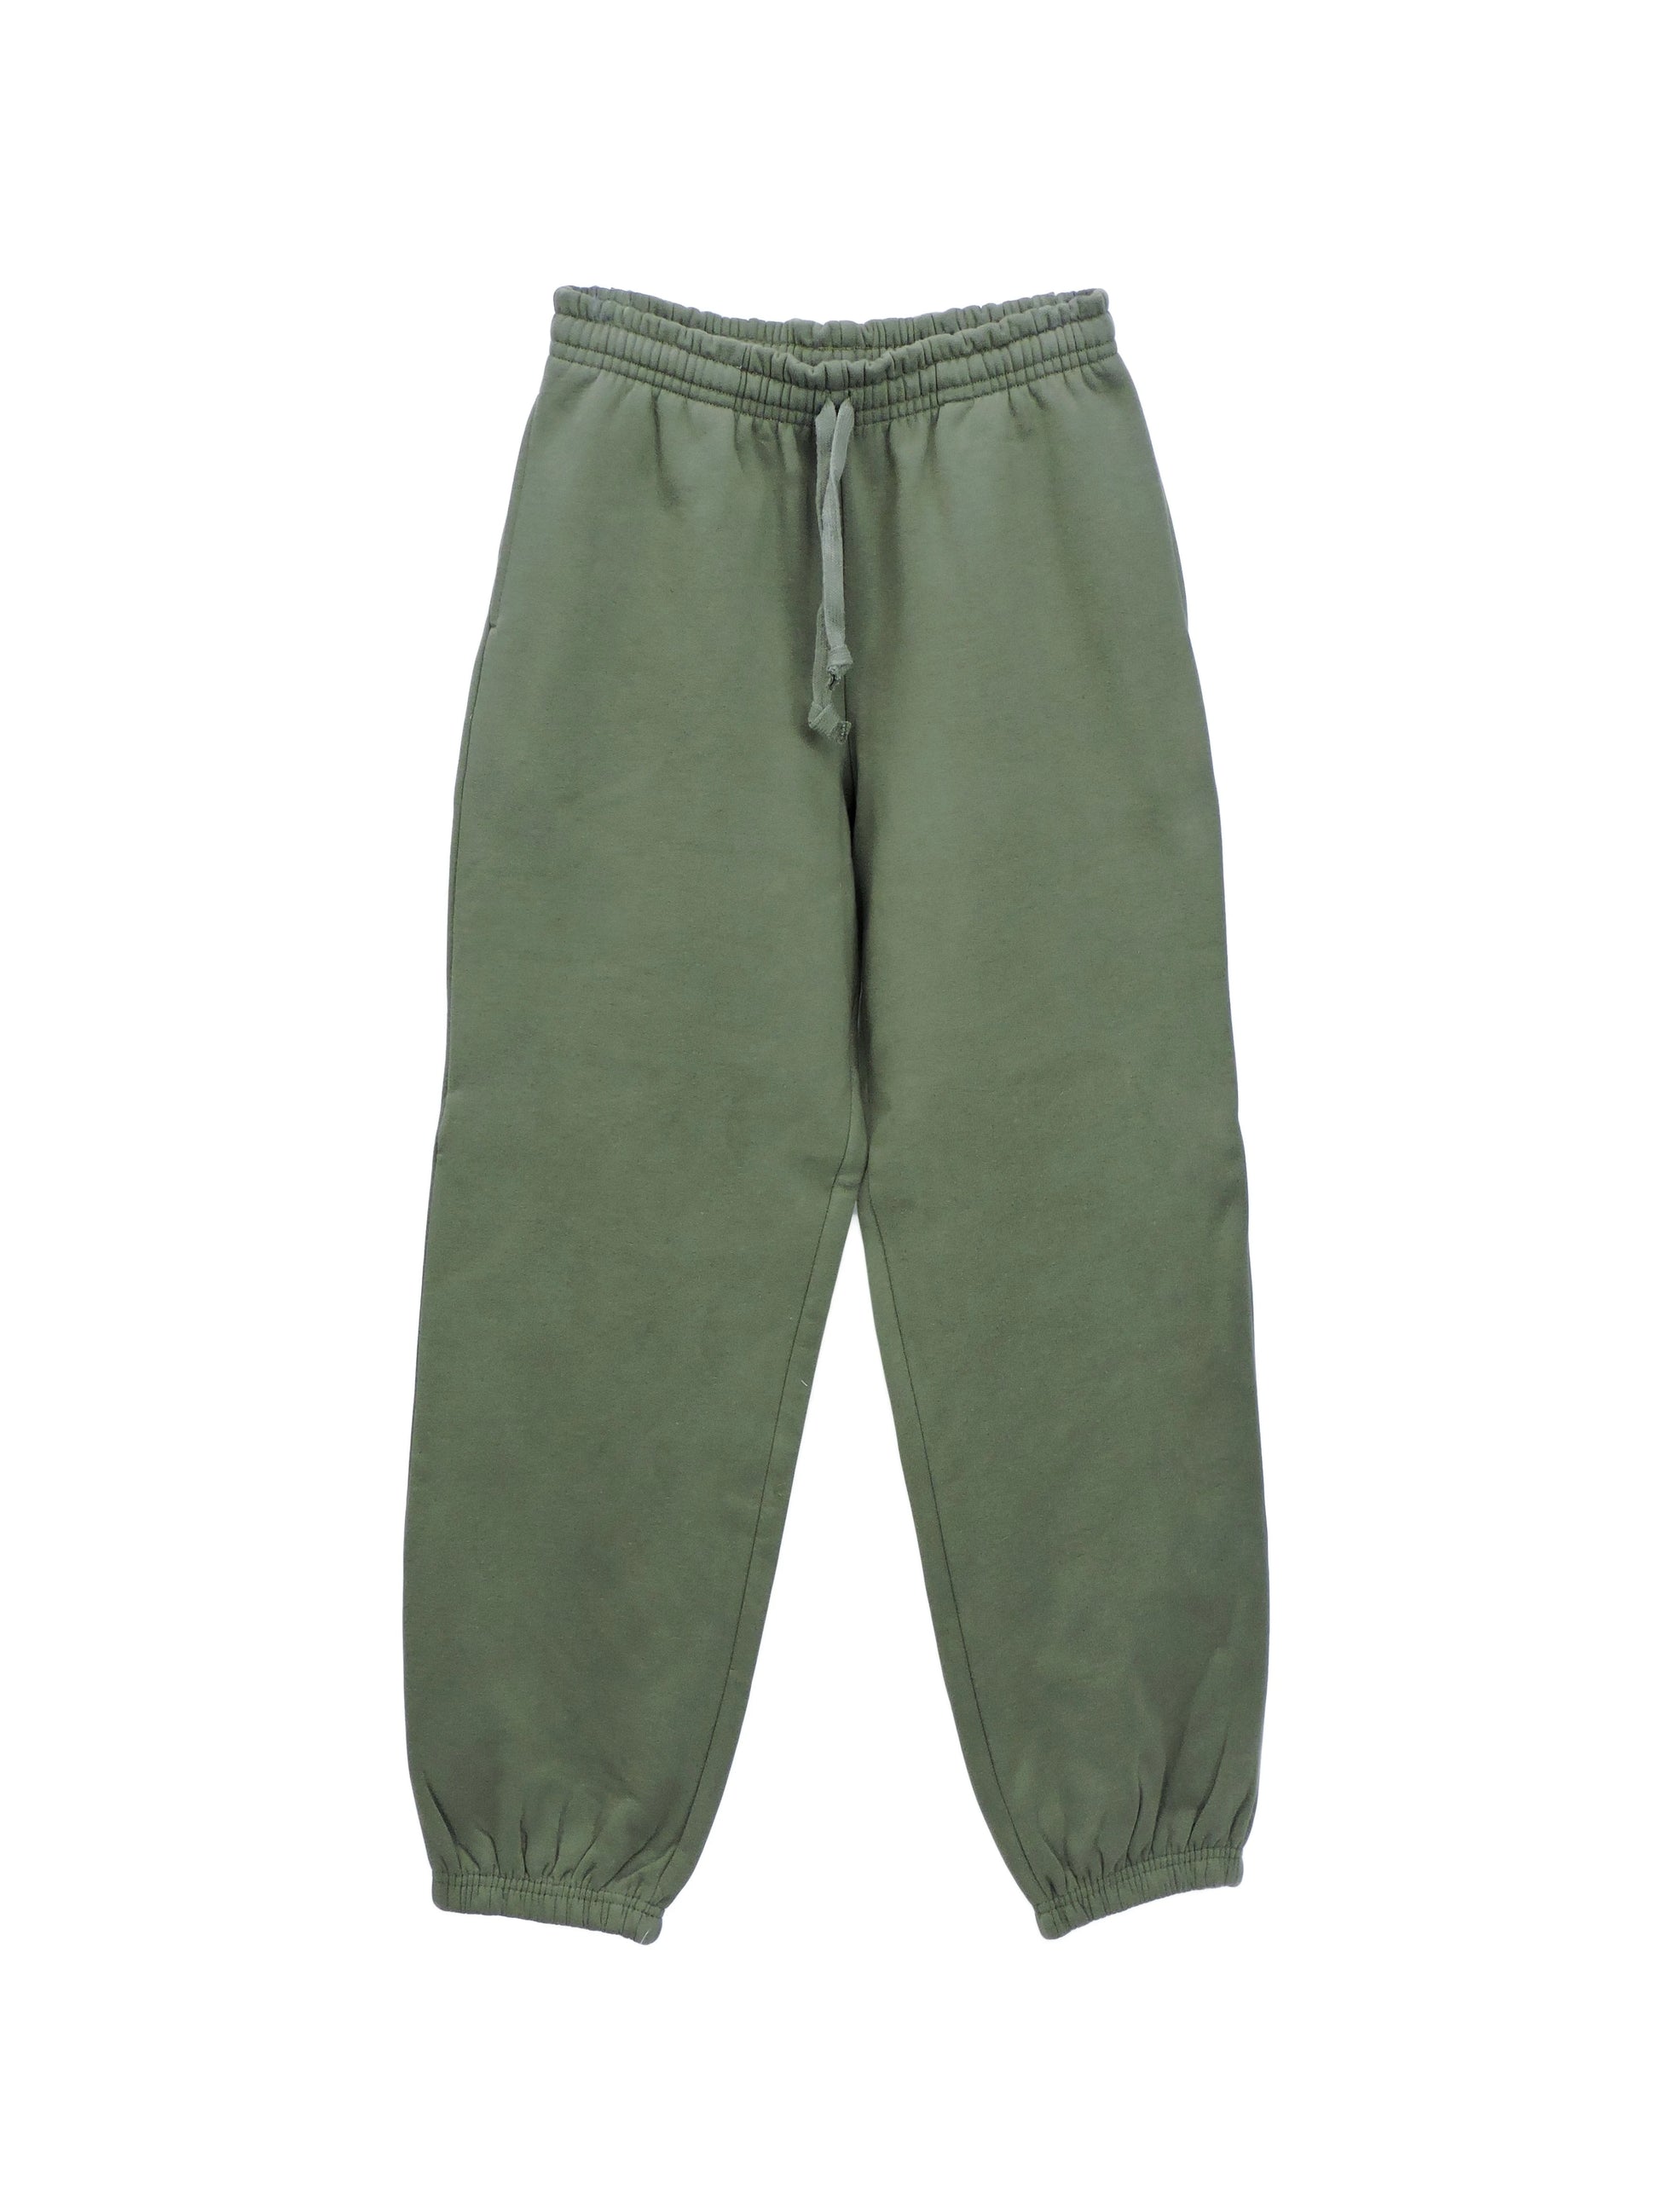 Park Sweatpants - Olive Green Heavy Fleece